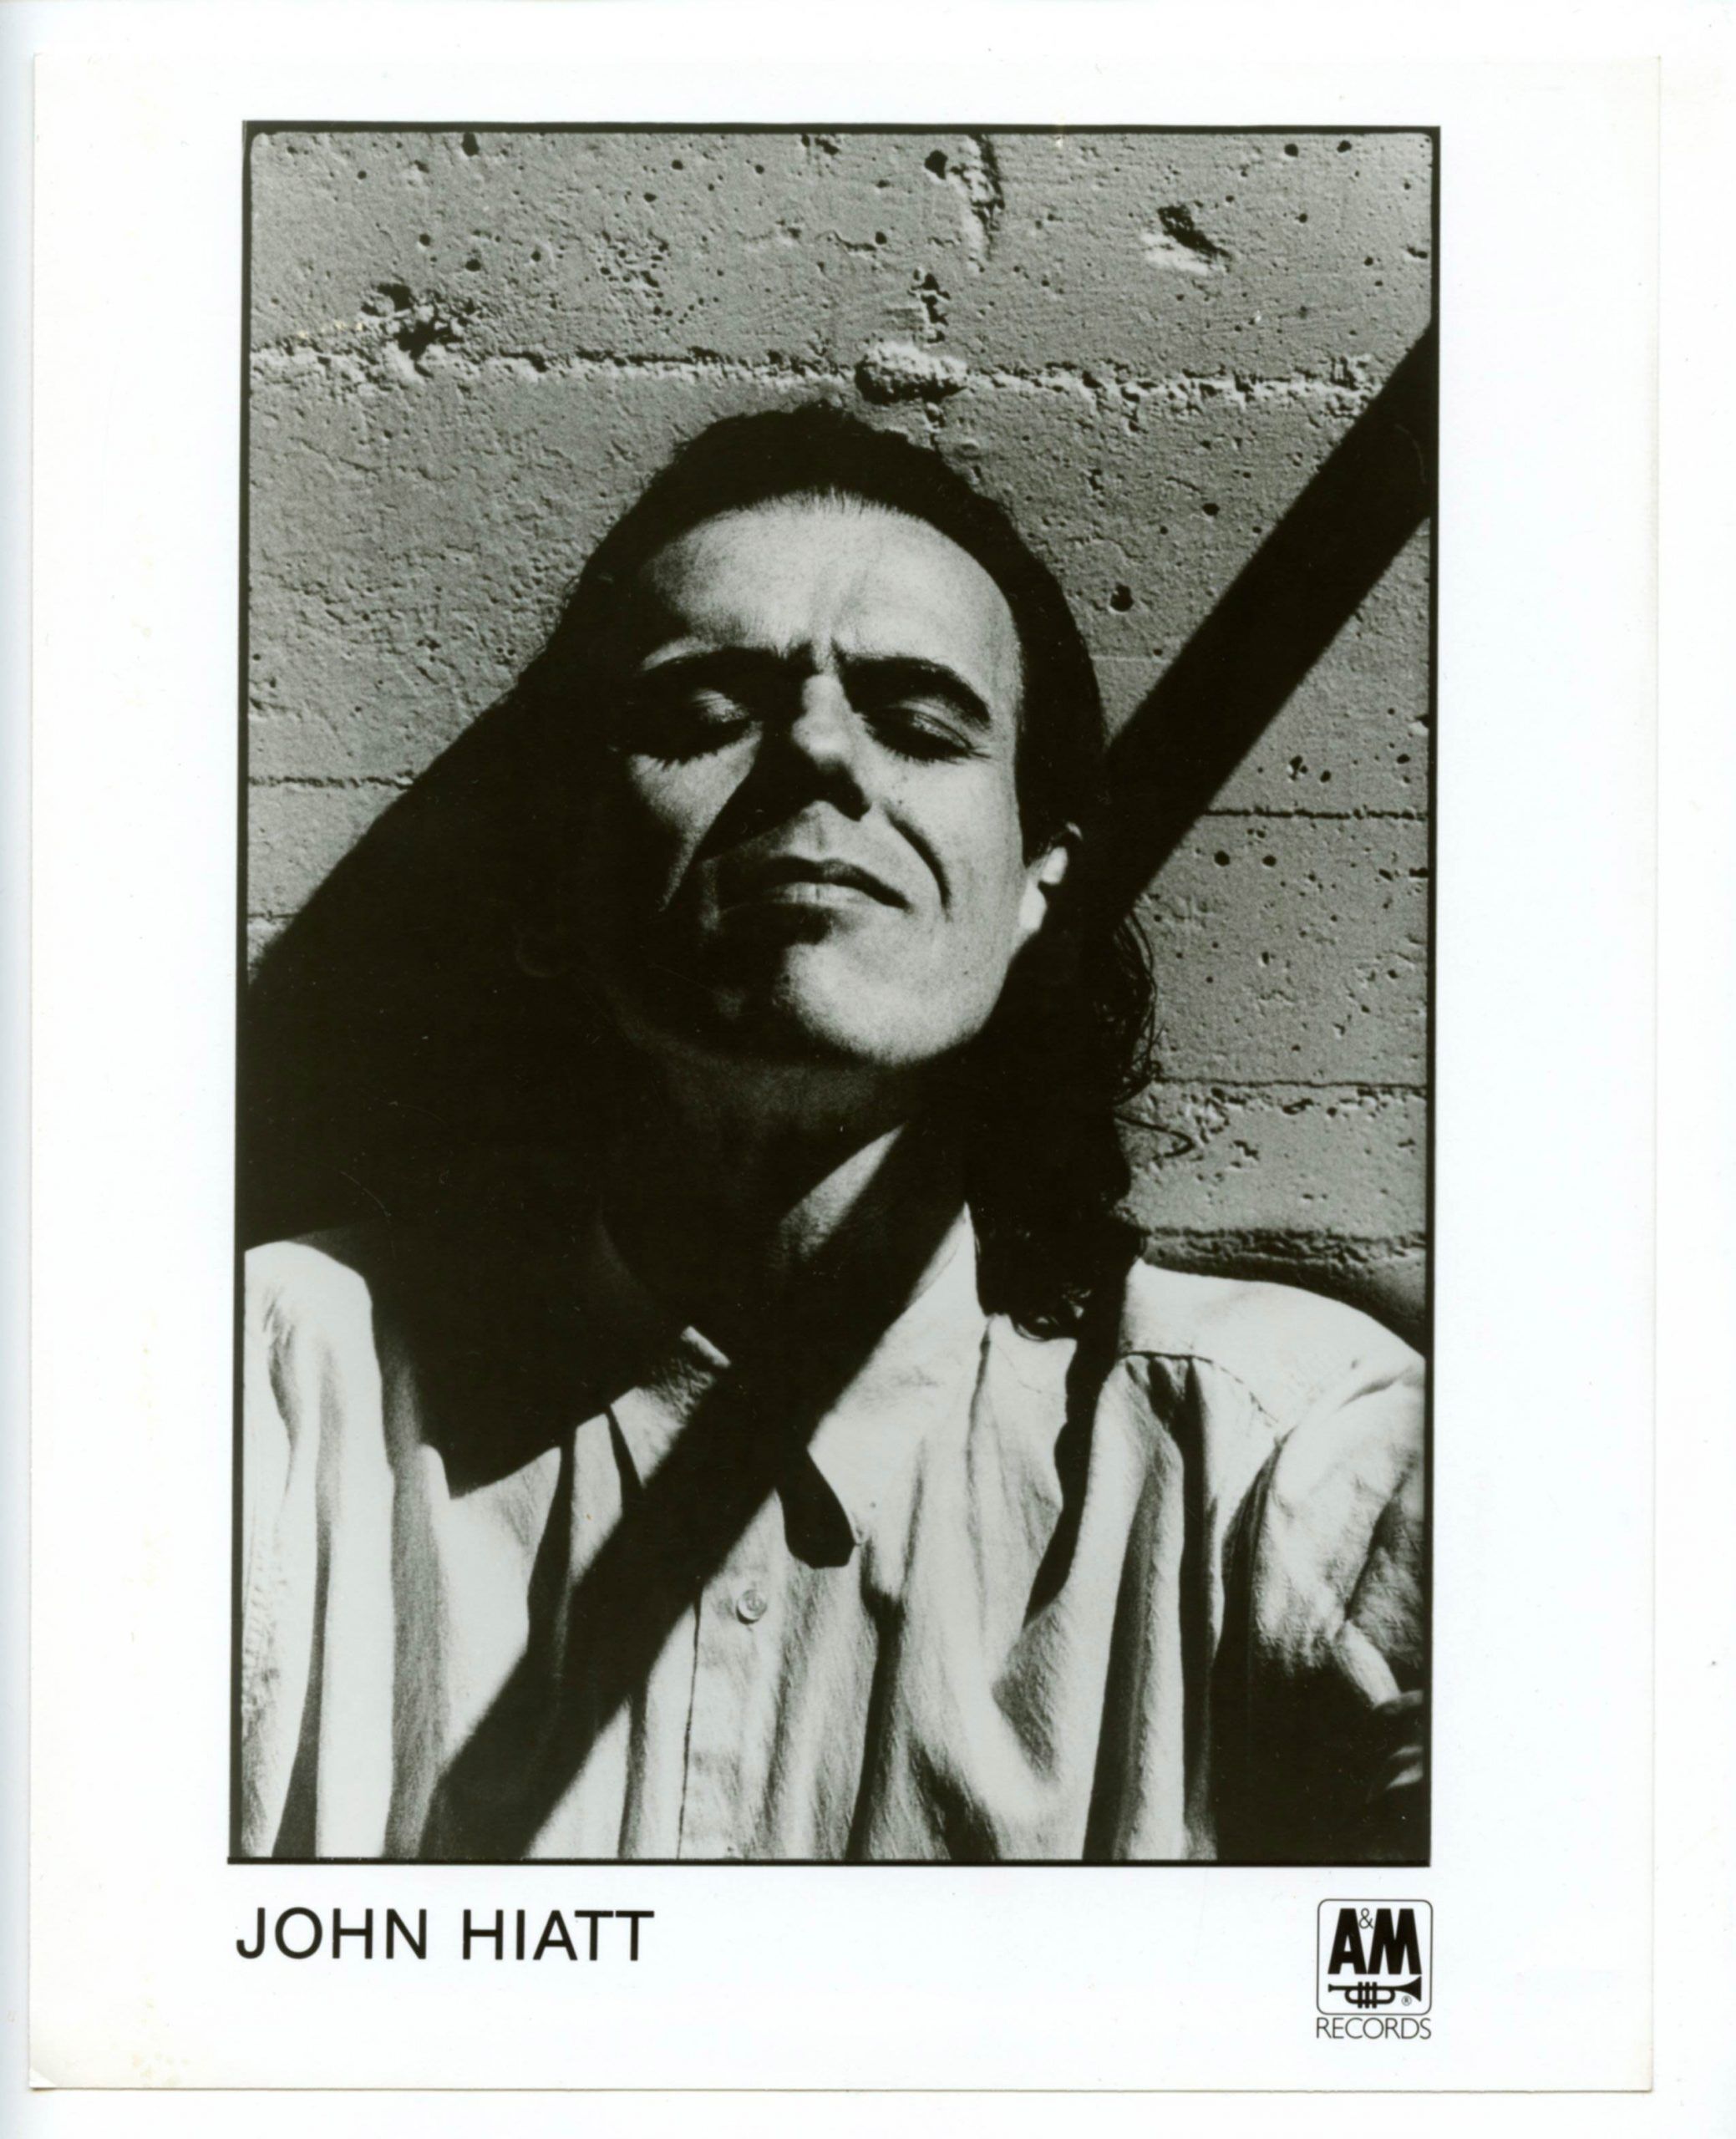 John Hiatt Photo 1980s A&M Records